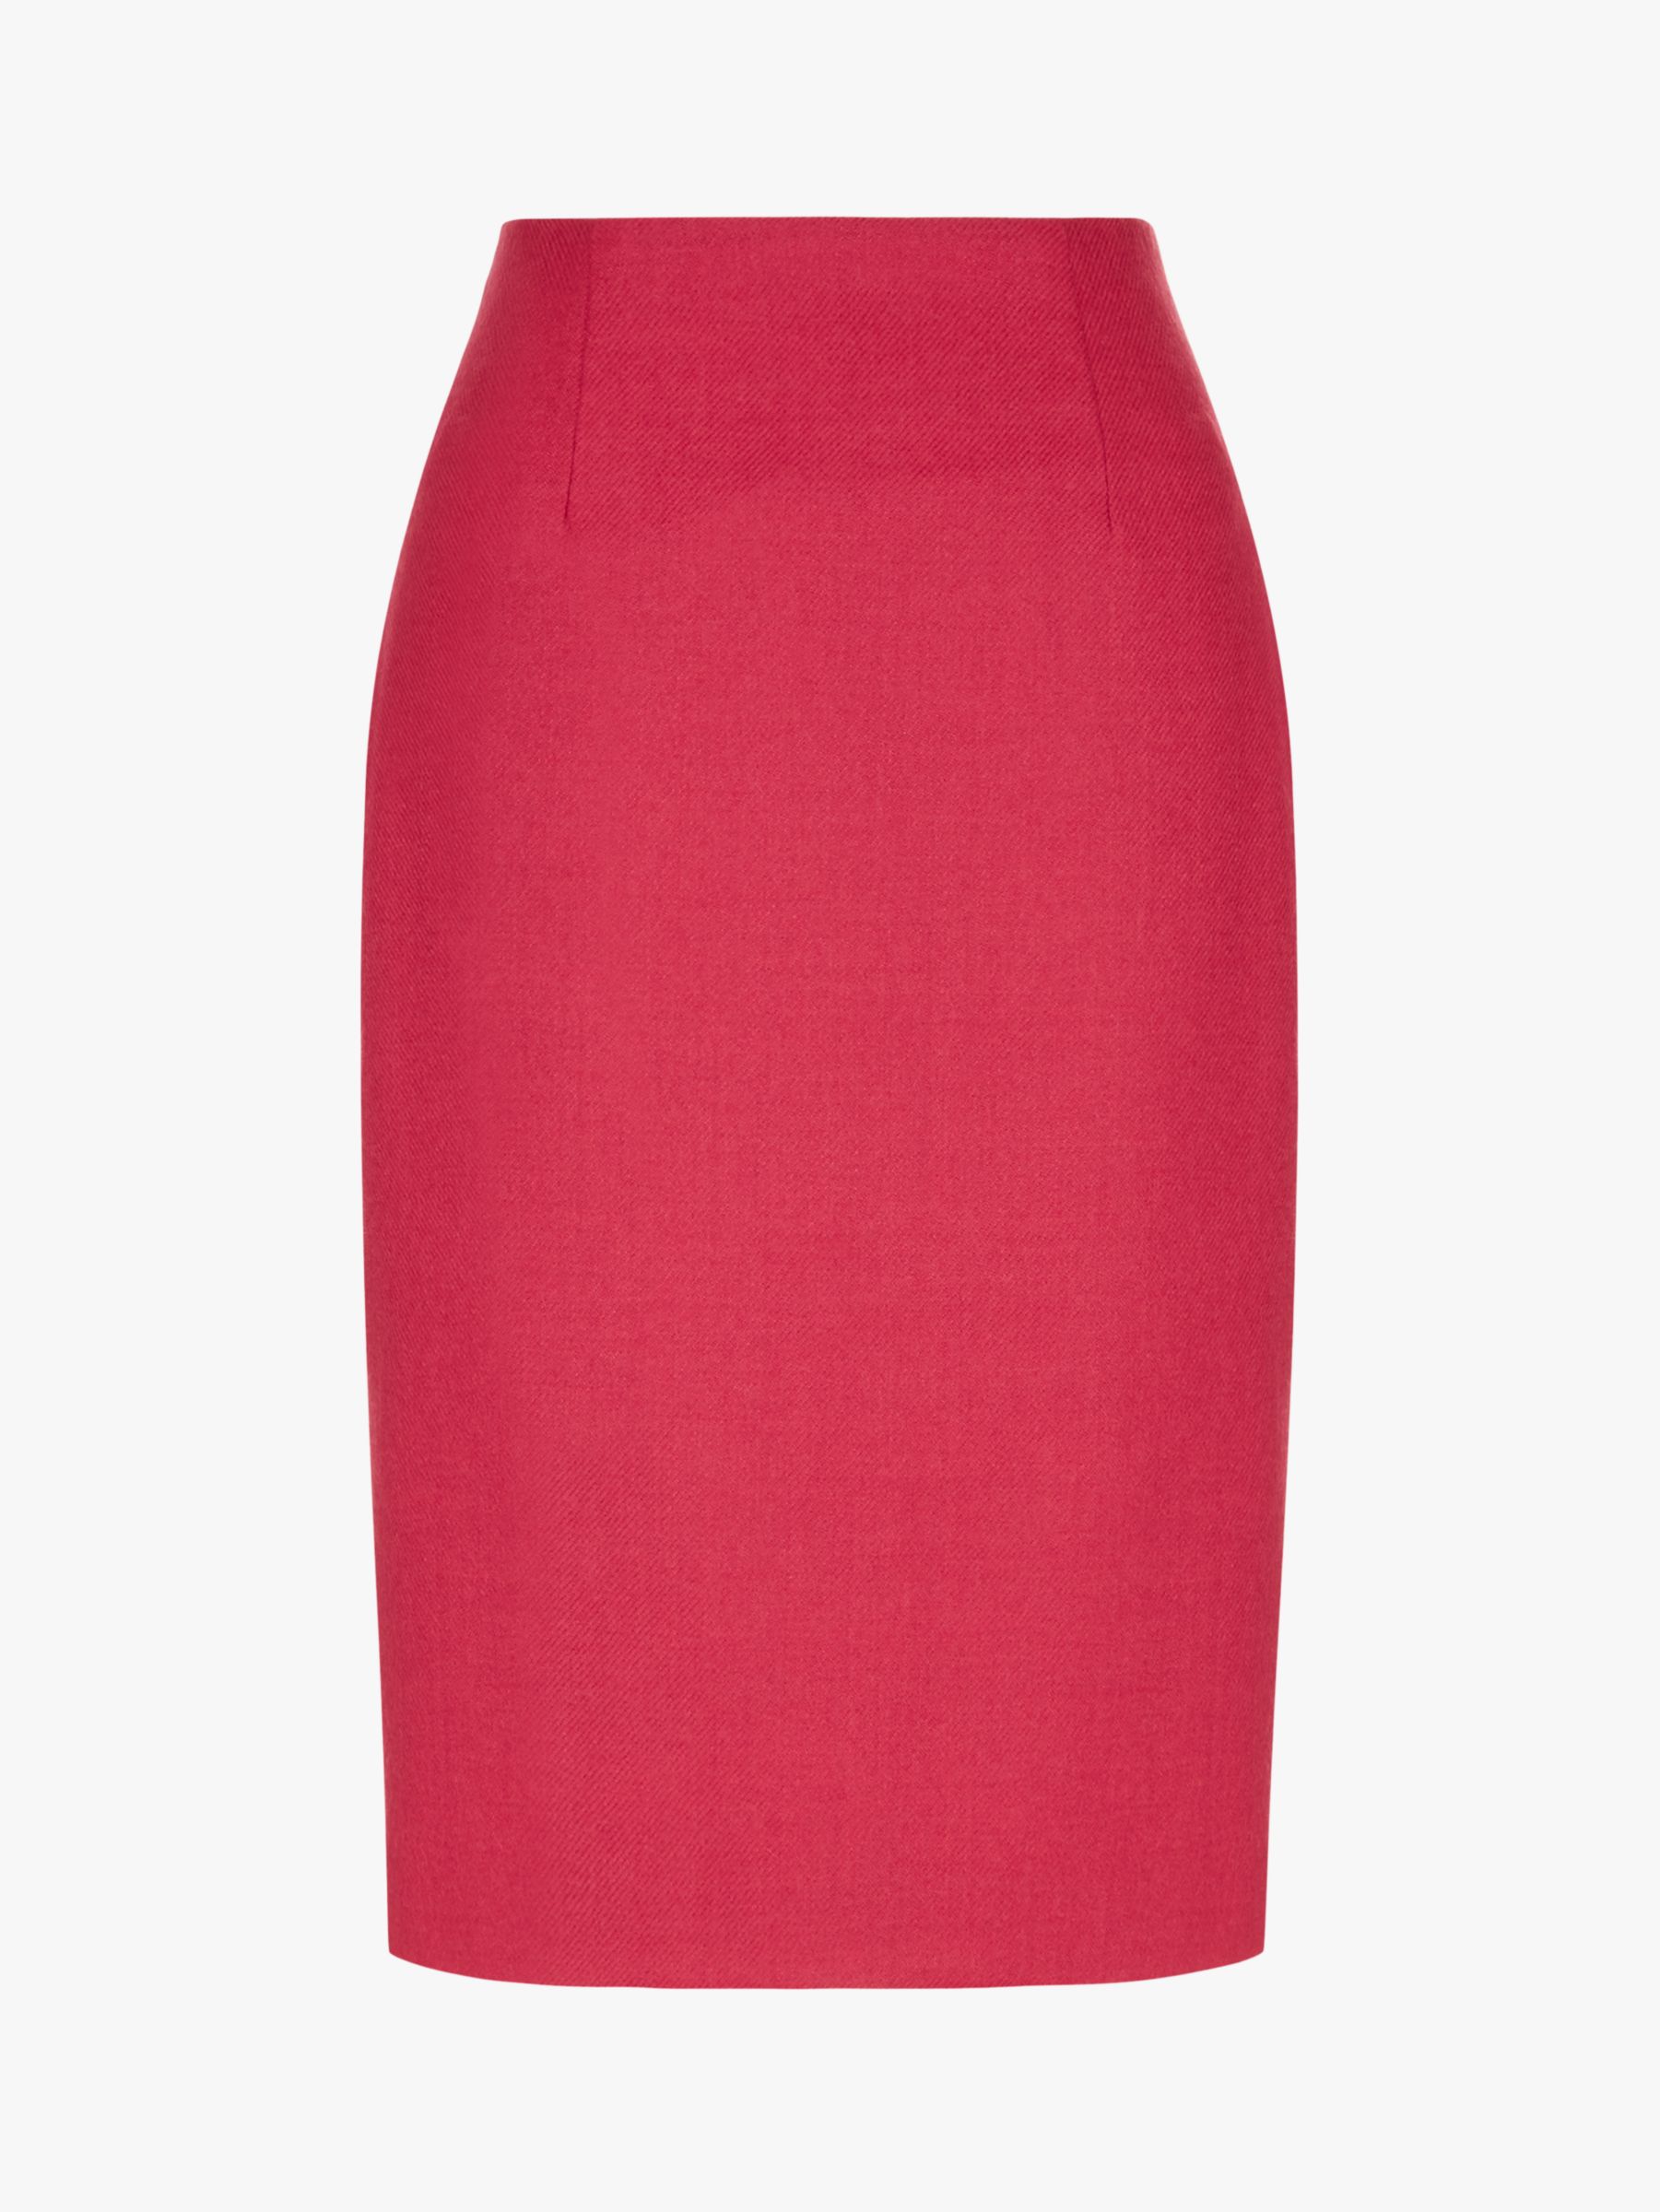 Hobbs Lacey Pencil Skirt, Hot Pink at John Lewis & Partners